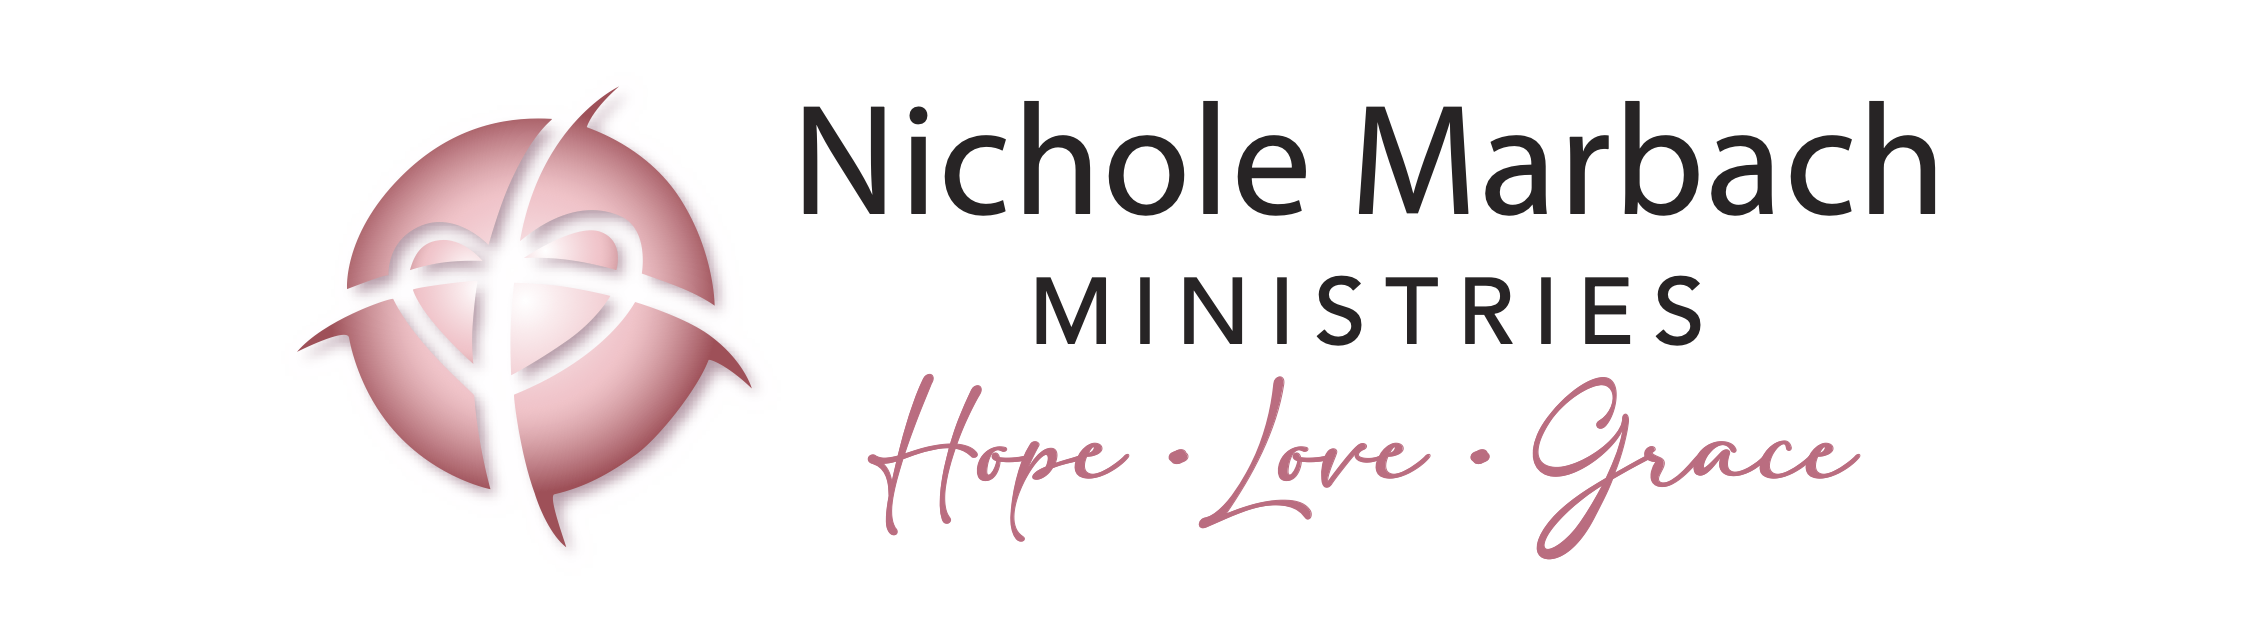 Nichole Marbach Ministries. Love Grace Healing.